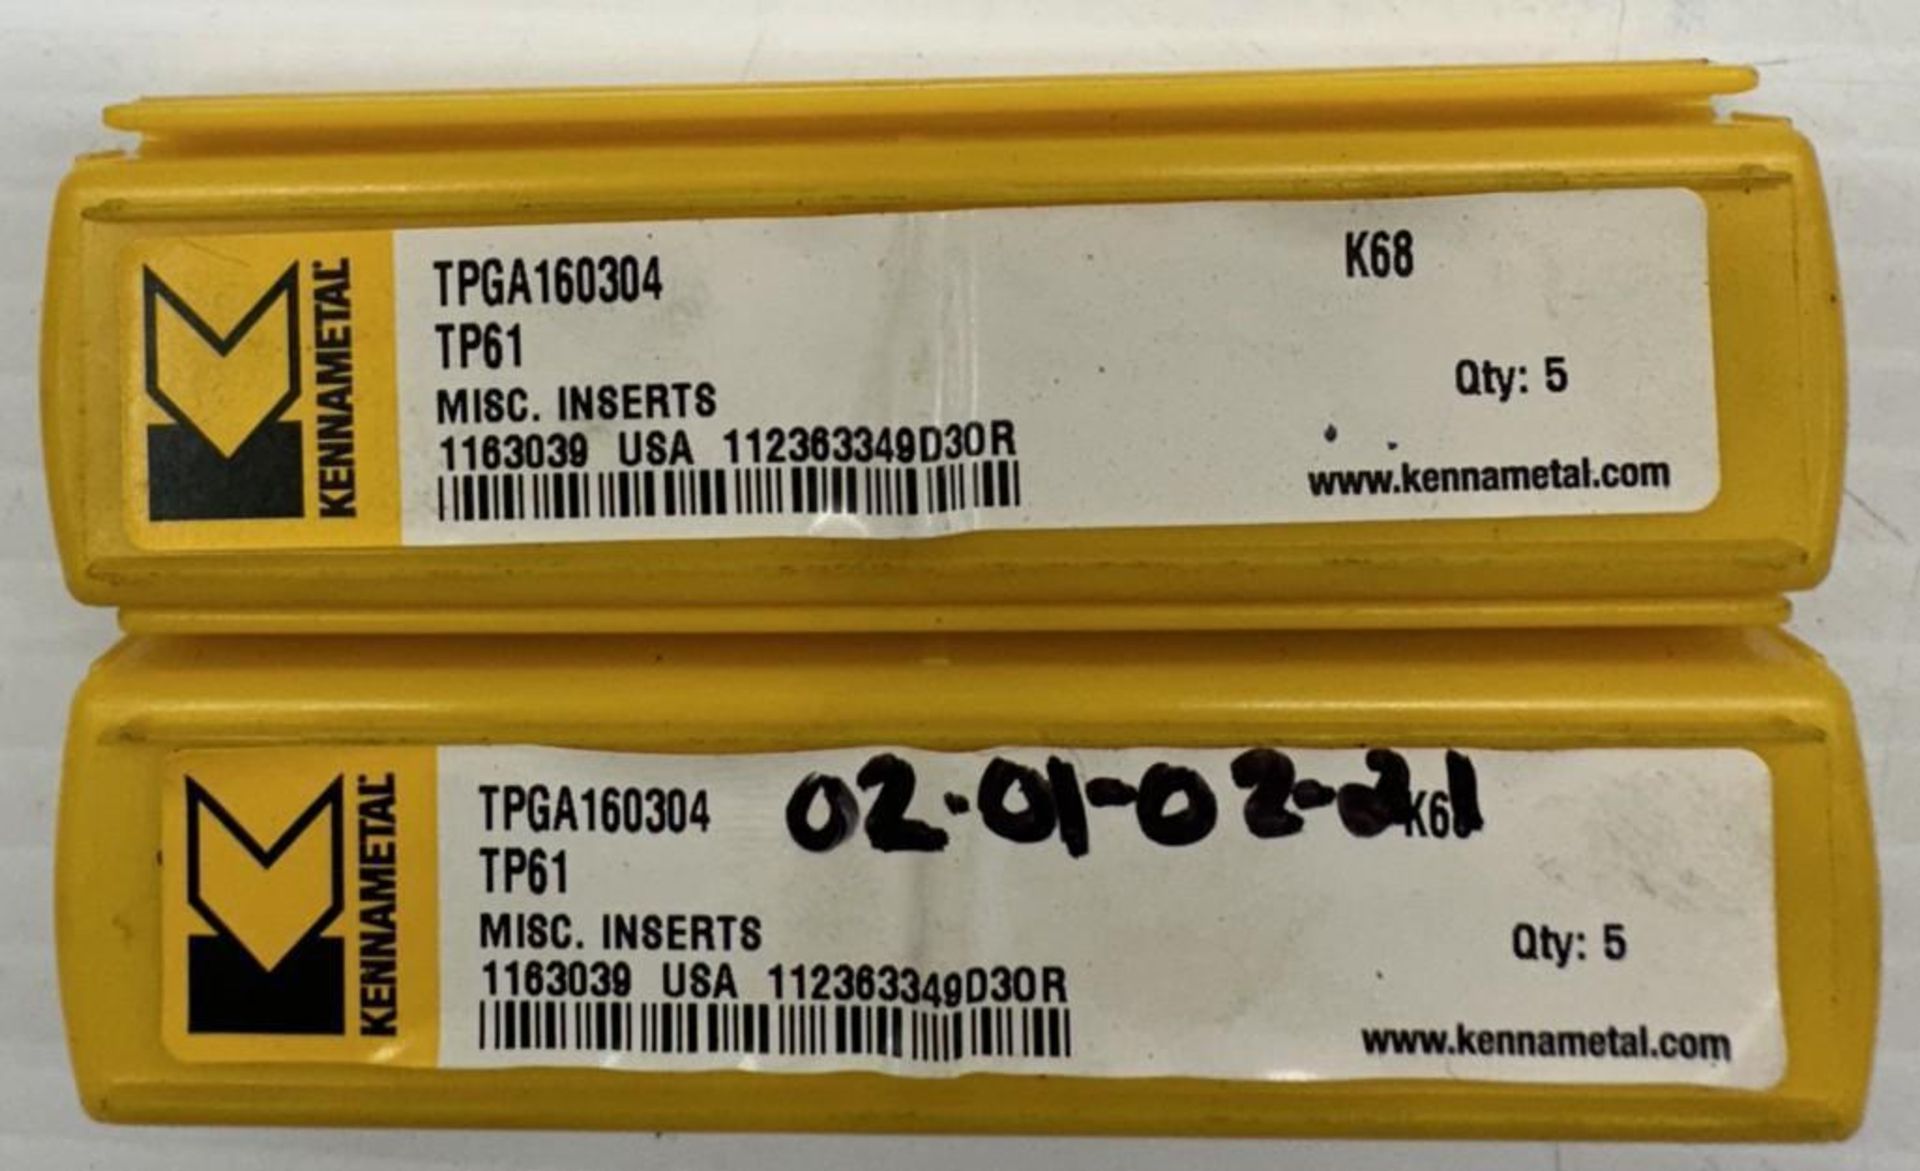 Lot of Kennametal #TPGA160304/K68 Carbide Inserts - Image 3 of 3